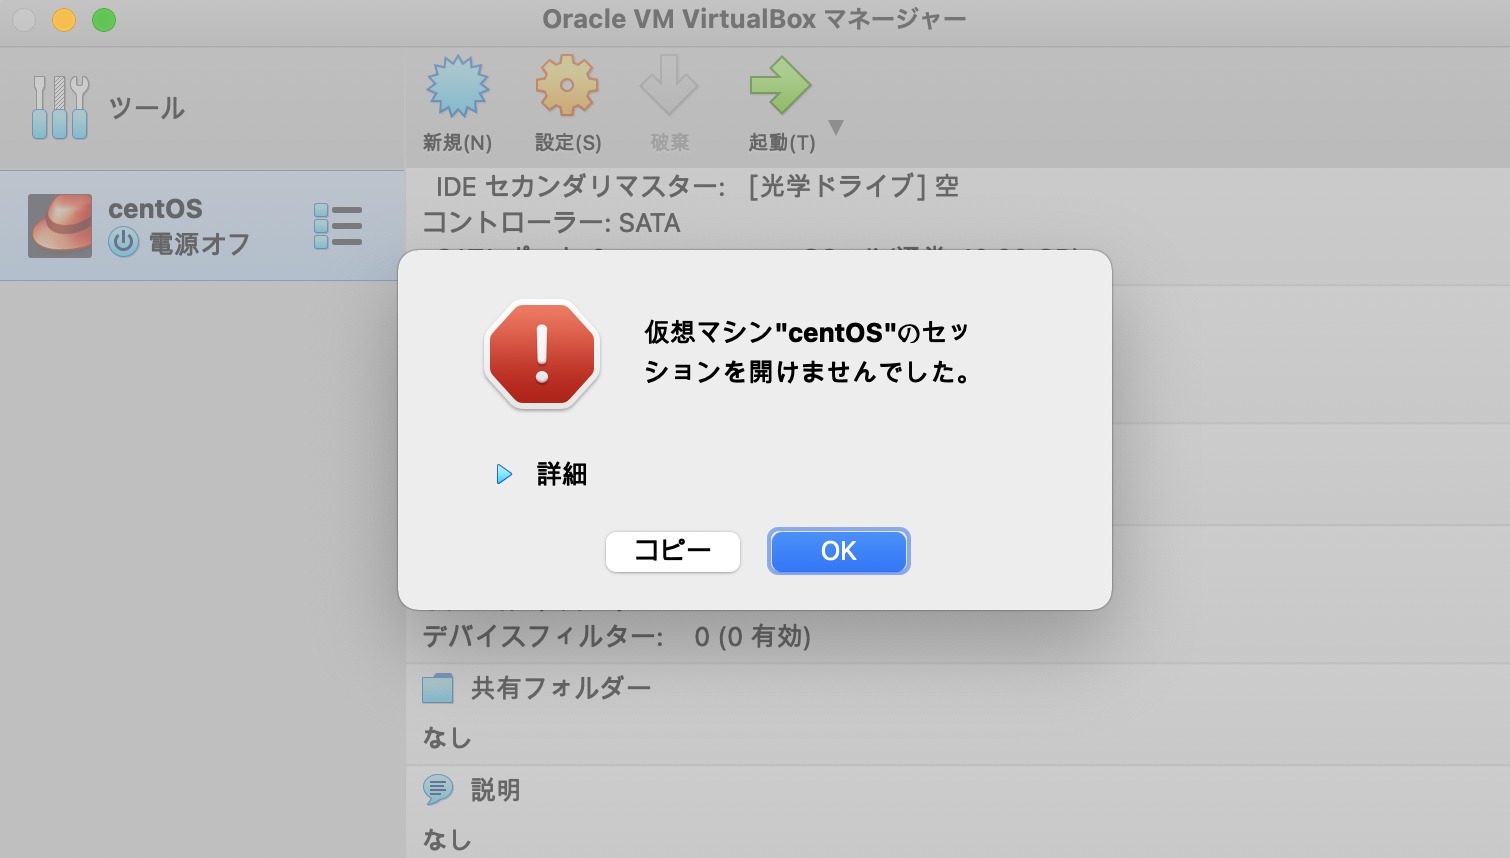 virtualbox apple m1